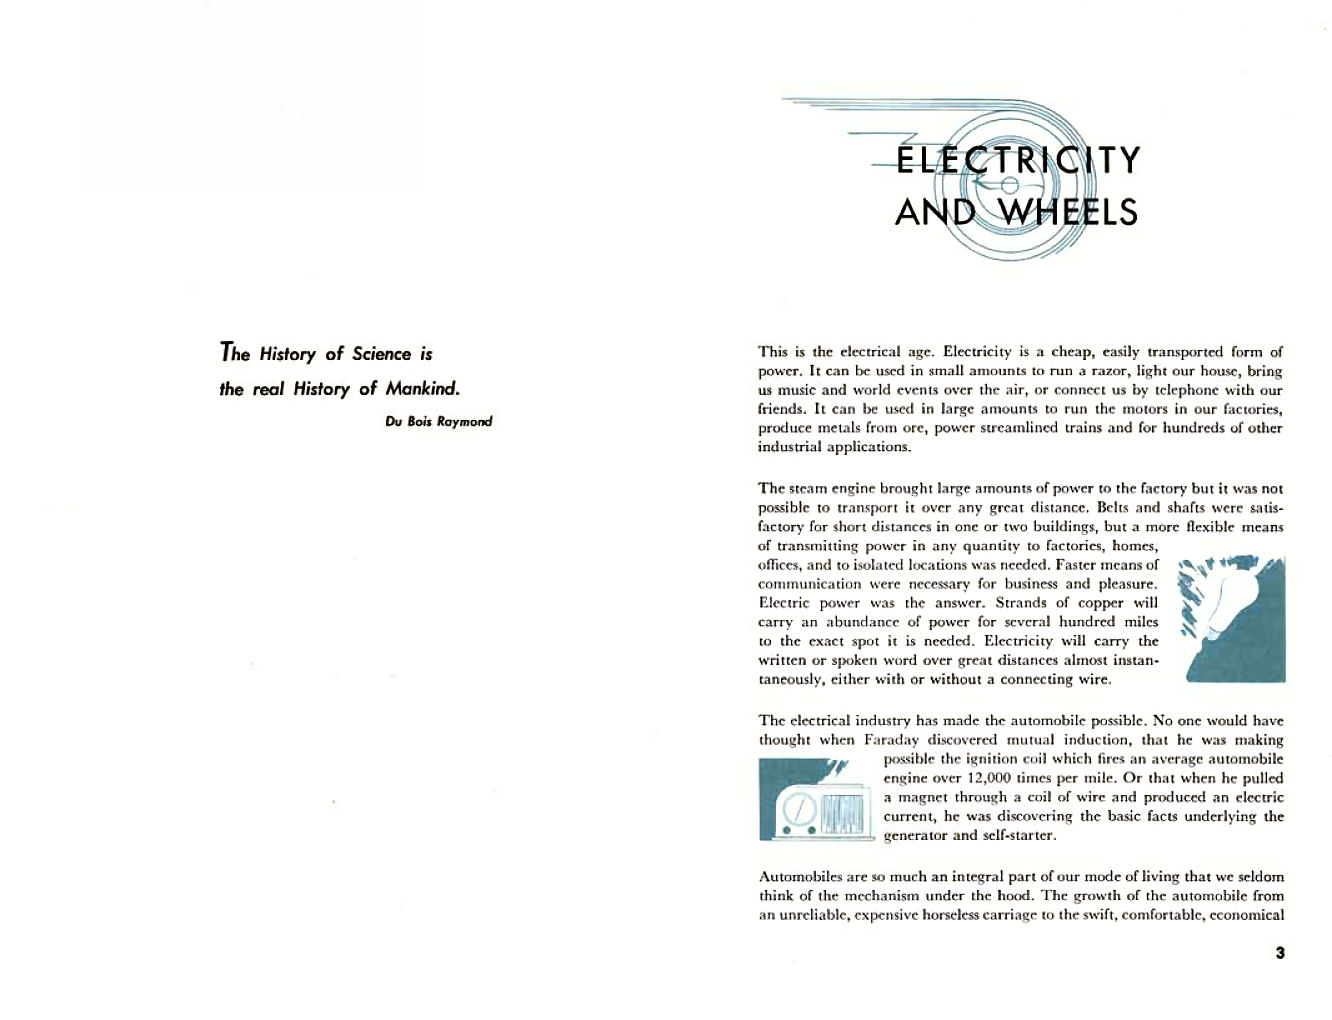 n_1953-Electricity and Wheels-02-03.jpg